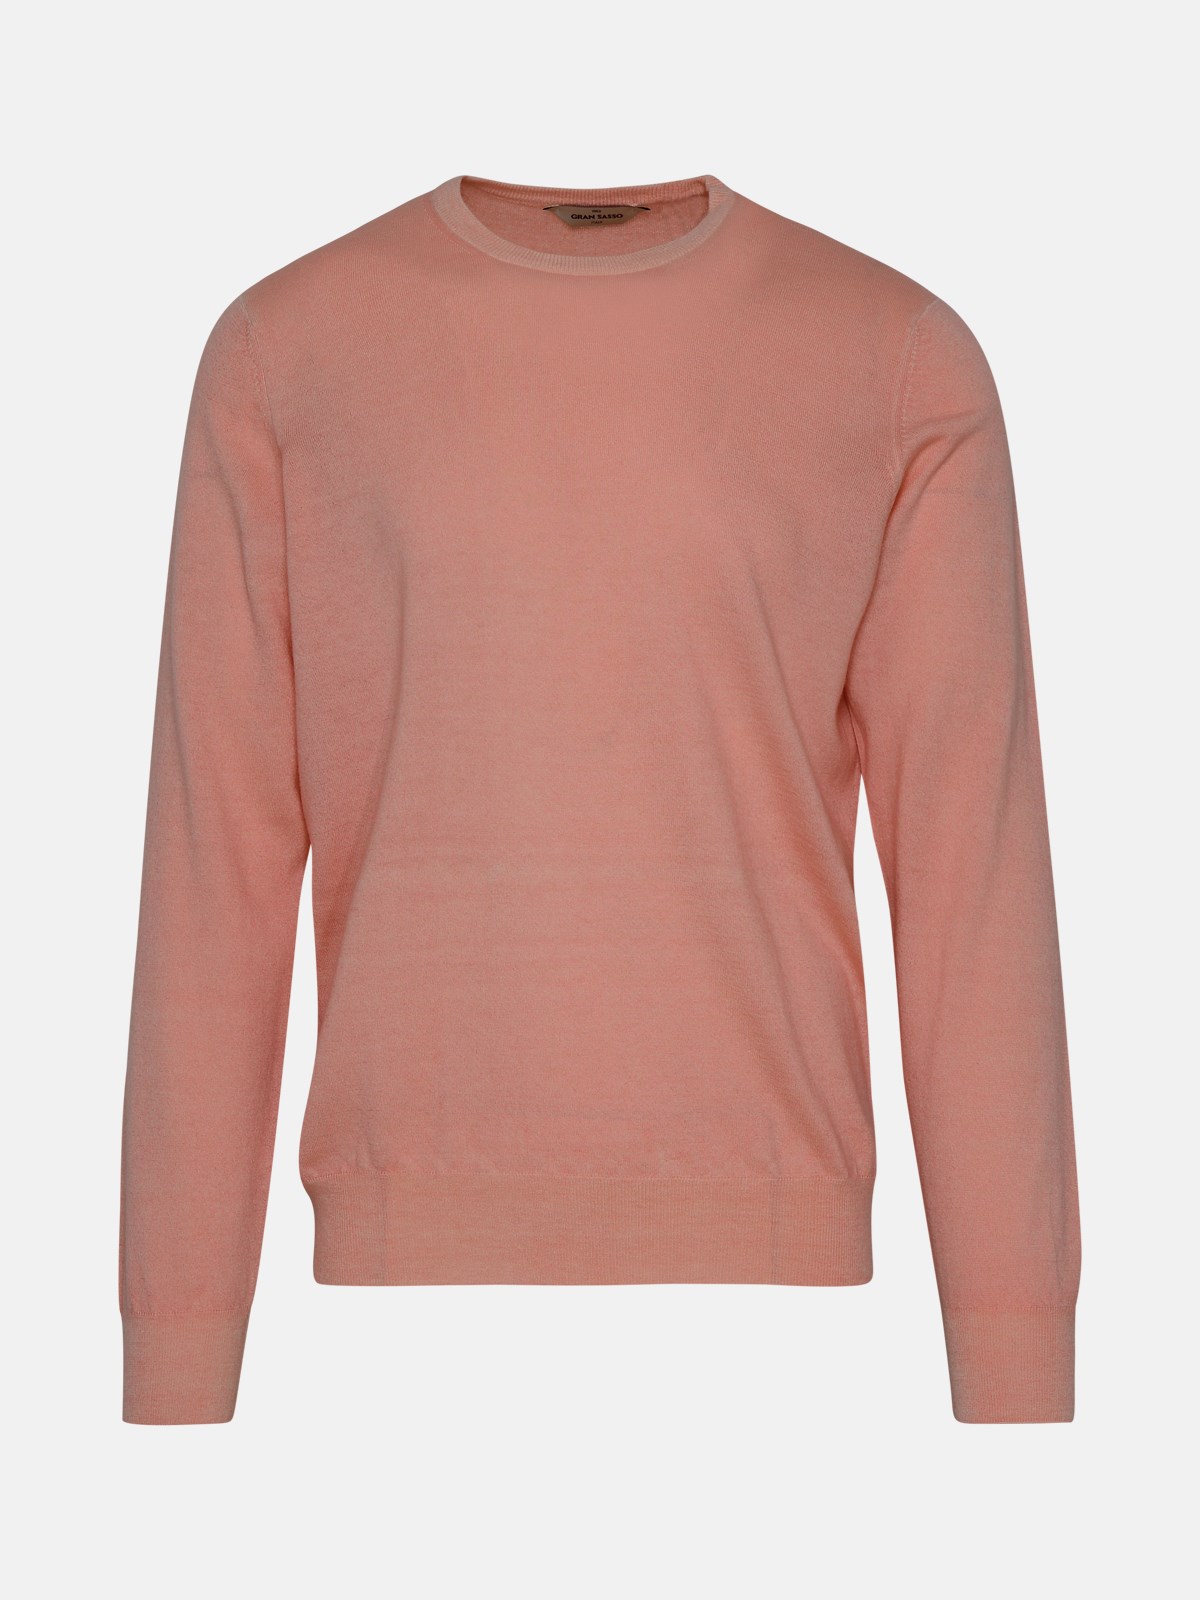 Gran Sasso Pink Cashmere Sweater